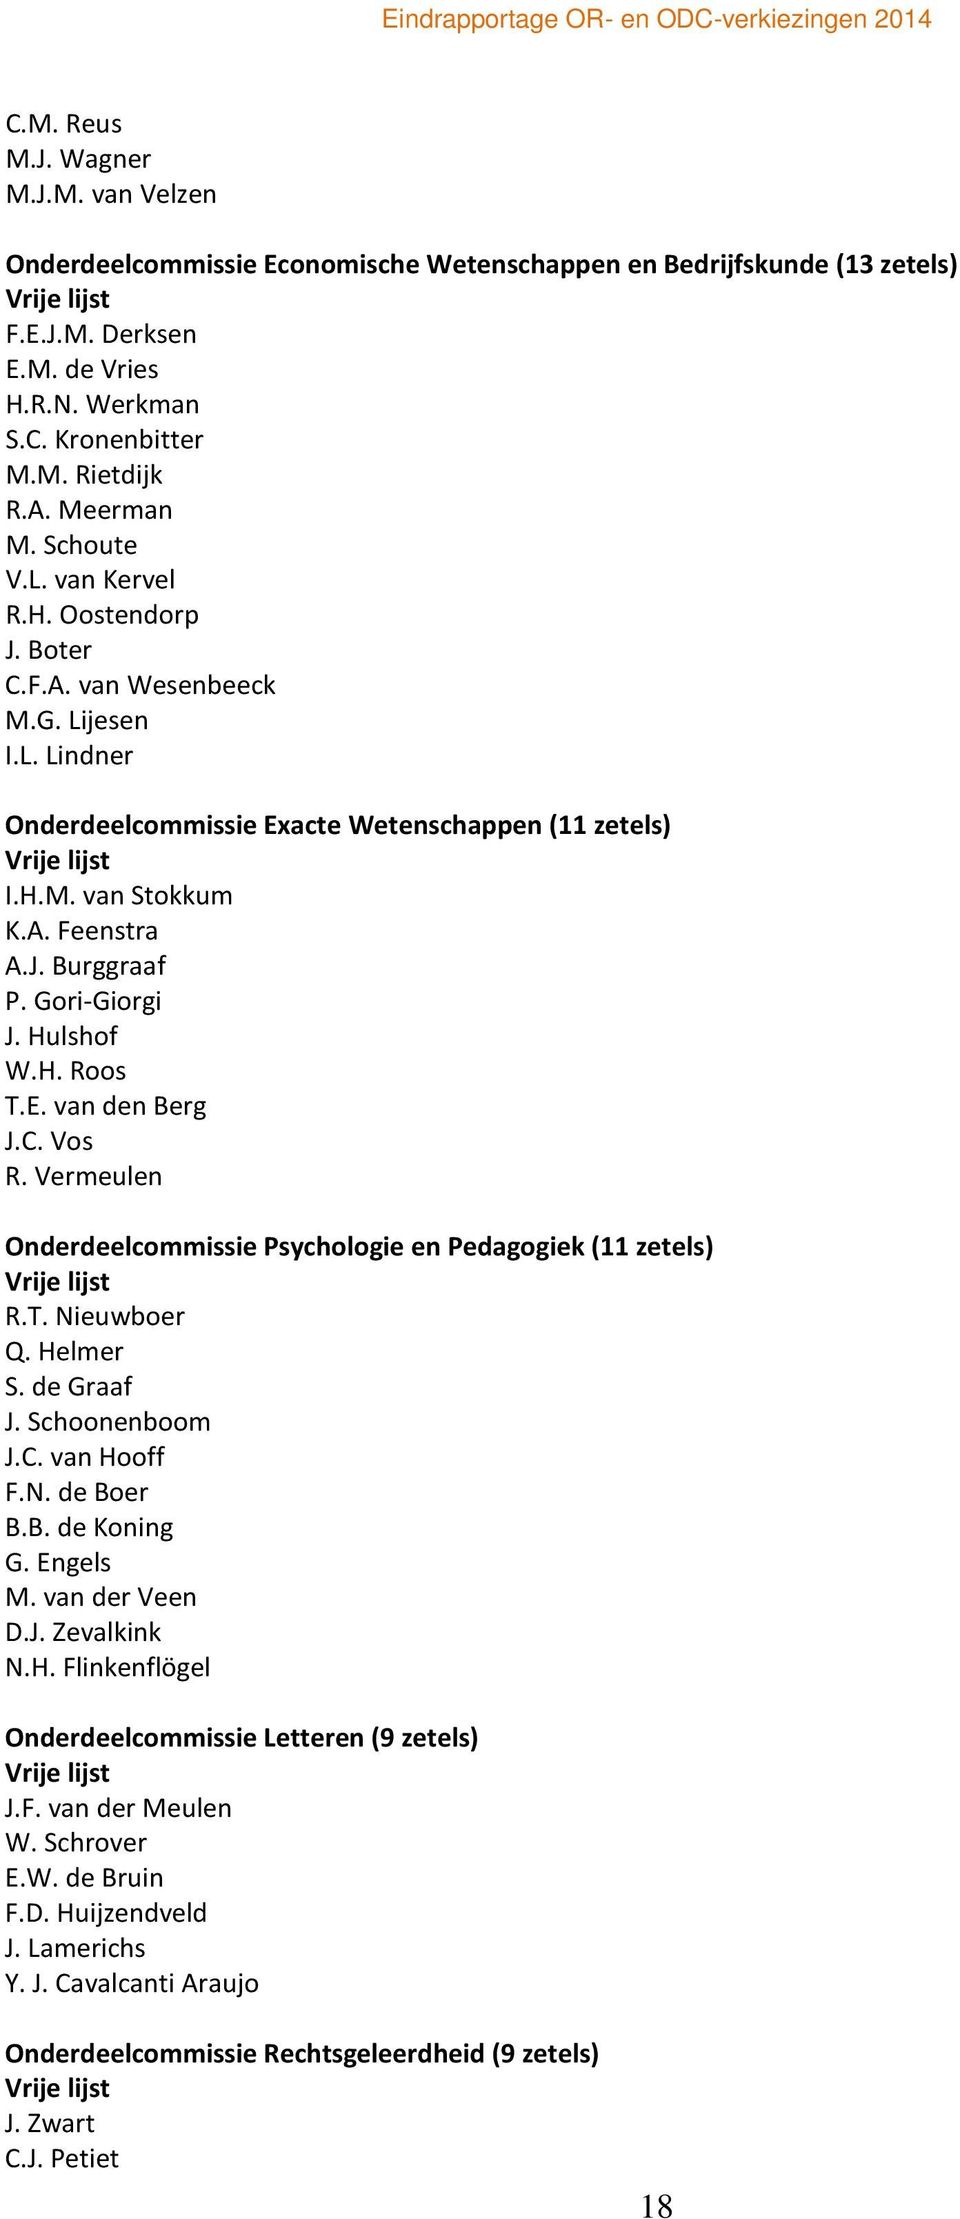 Gori-Giorgi J. Hulshof W.H. Roos T.E. van den Berg J.C. Vos R. Vermeulen Onderdeelcommissie Psychologie en Pedagogiek (11 zetels) R.T. Nieuwboer Q. Helmer S. de Graaf J. Schoonenboom J.C. van Hooff F.